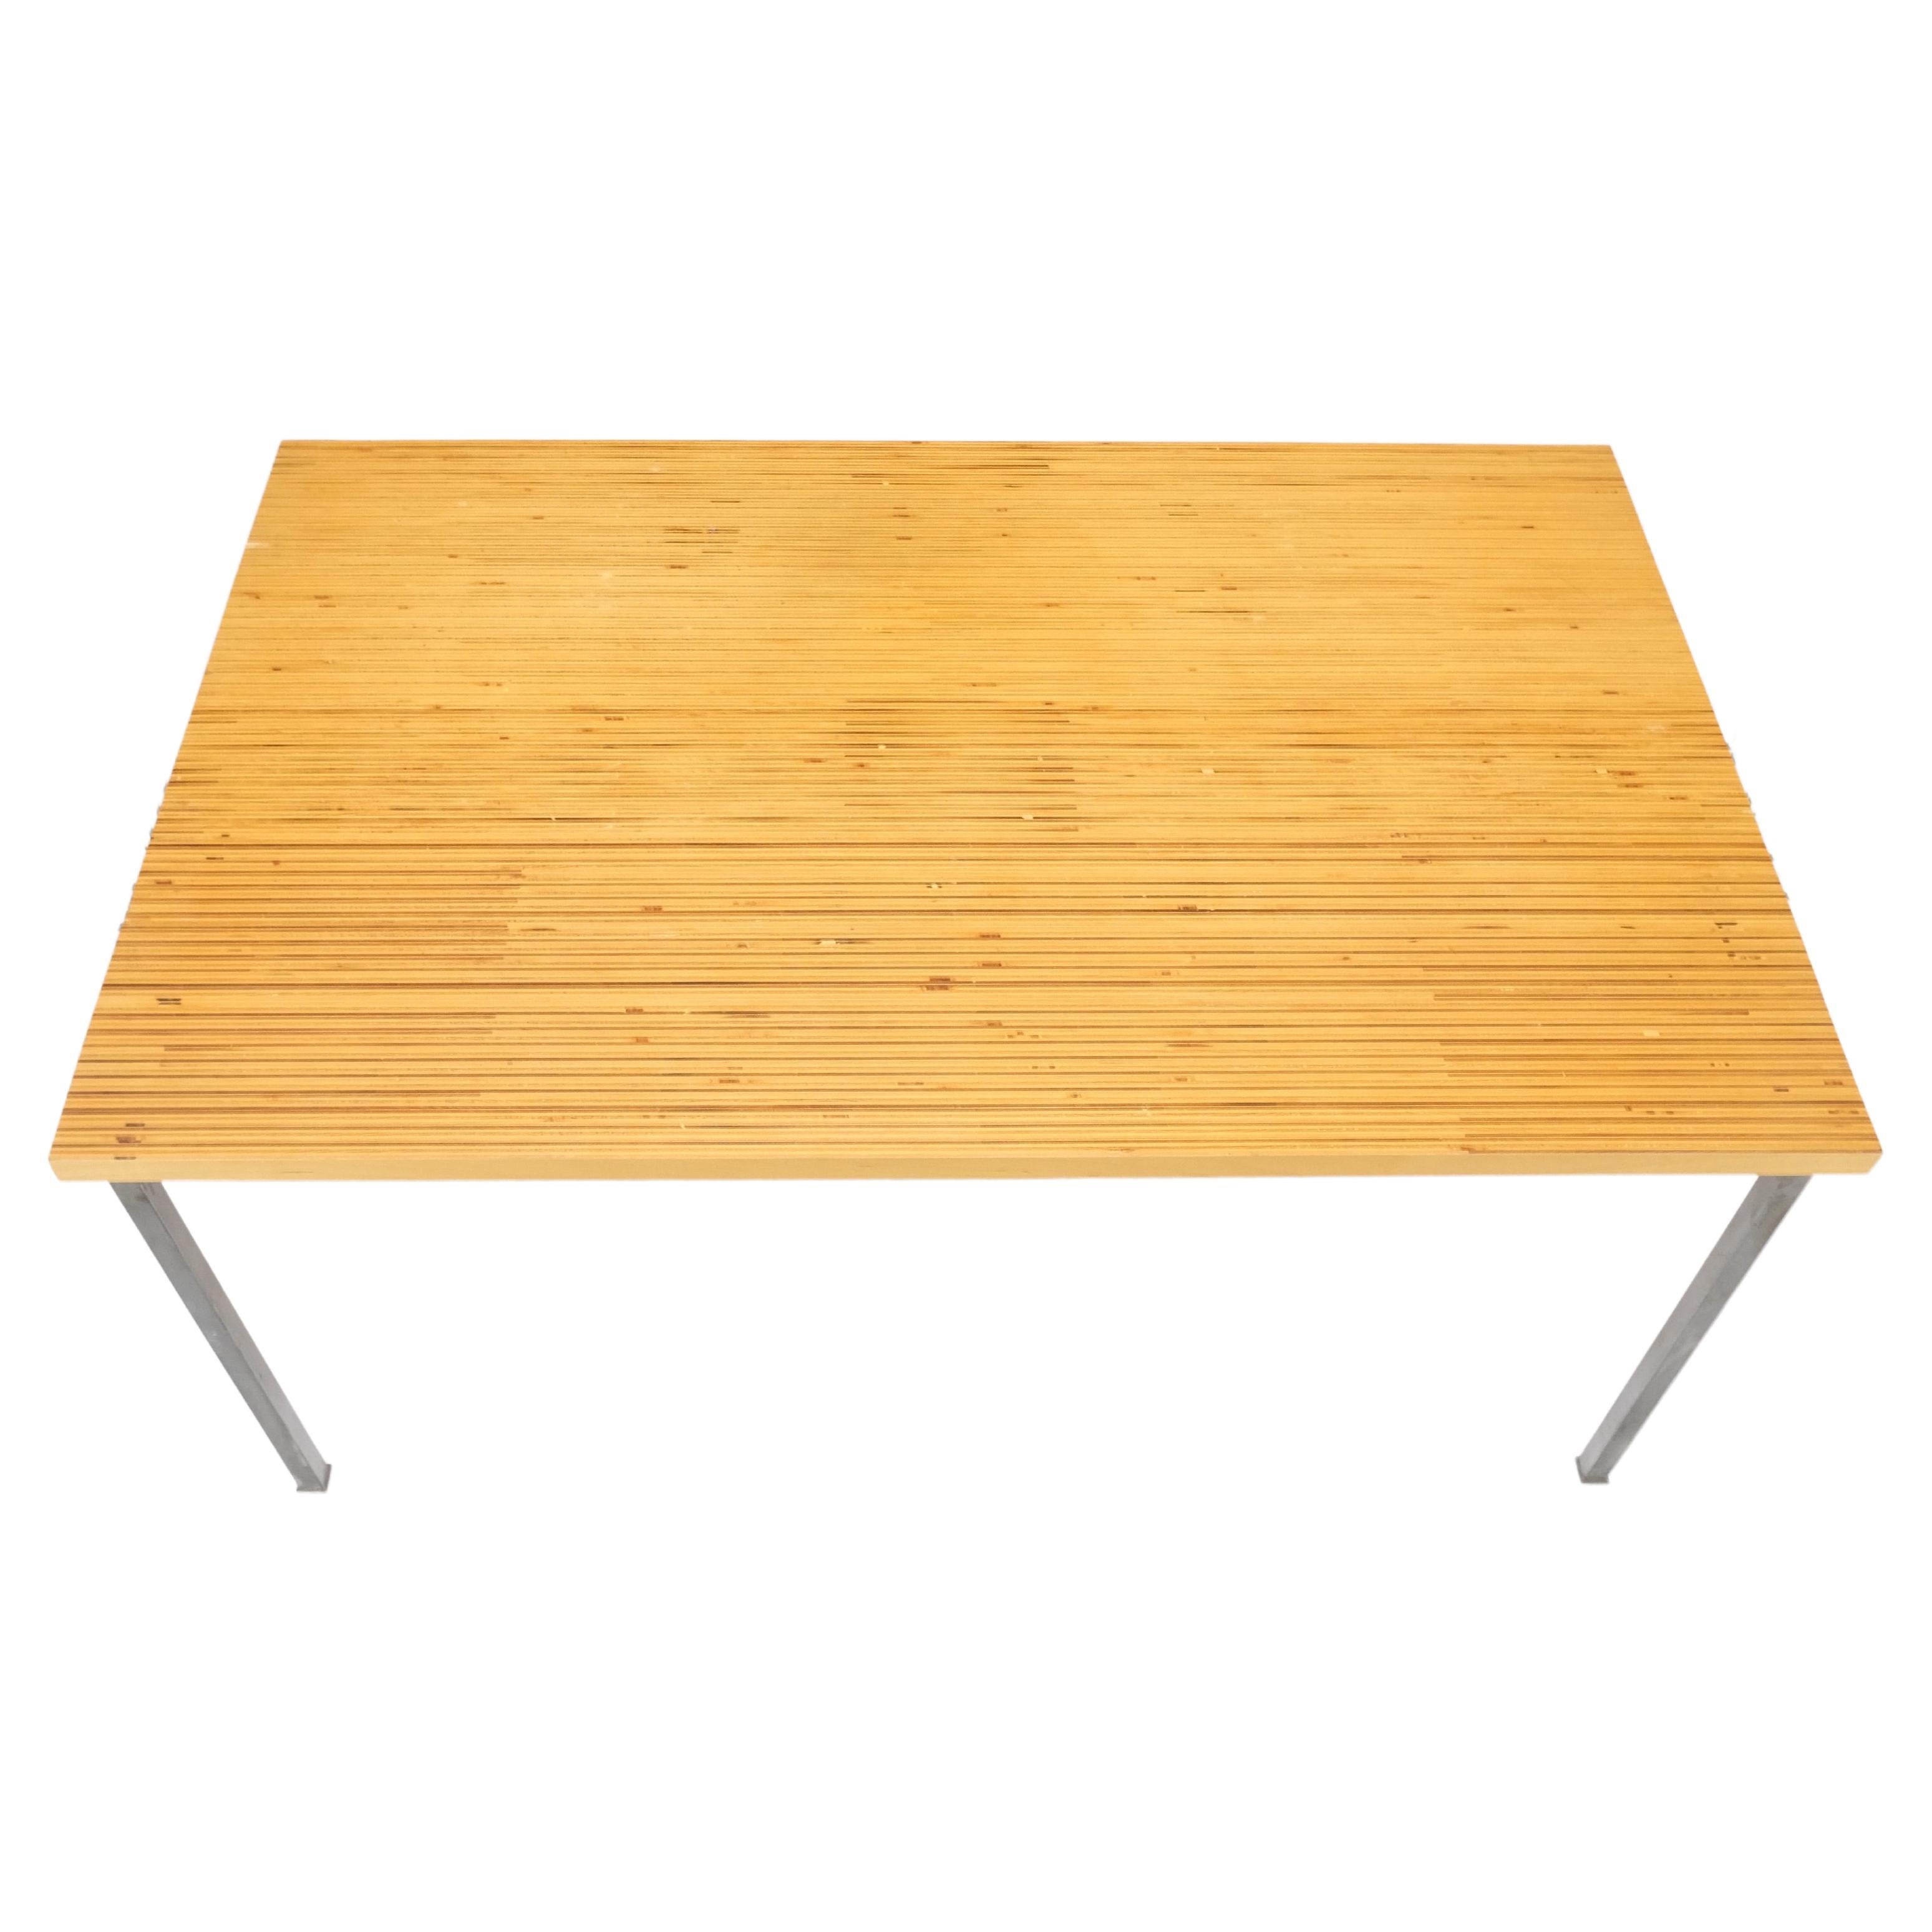 Strips of Wood Glued Together Unique Pattern Table Top Industrial Base Desk Mint For Sale